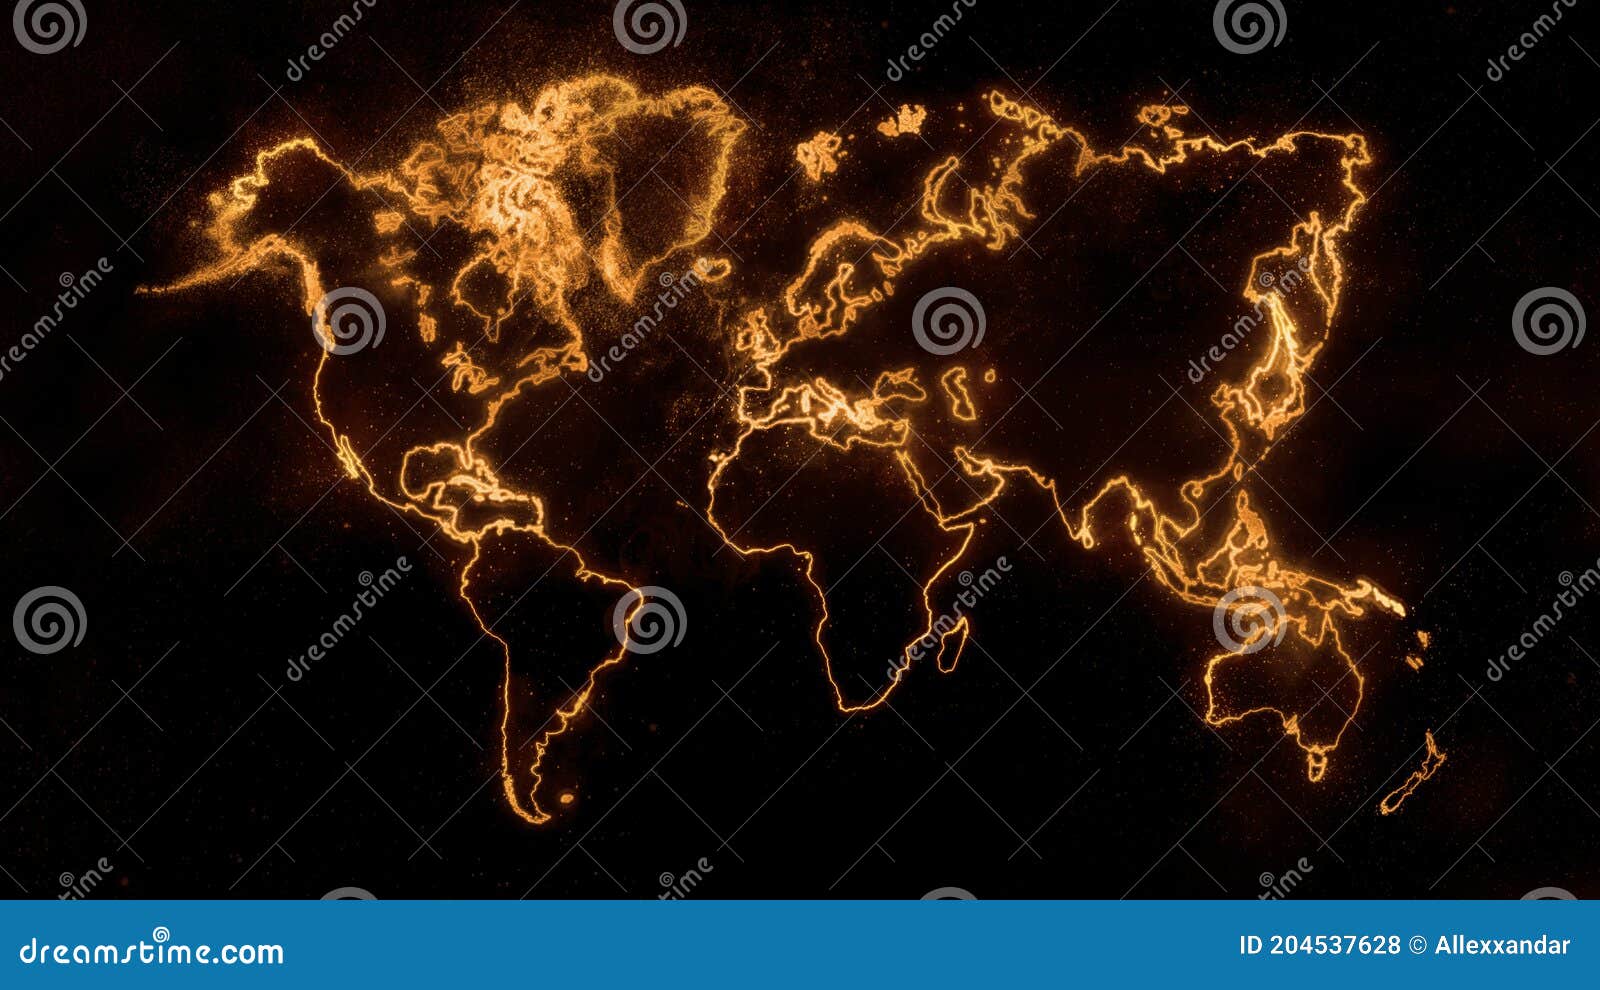 colorful worldÃÂ mapÃÂ on dark background, orangeÃÂ glowing world map